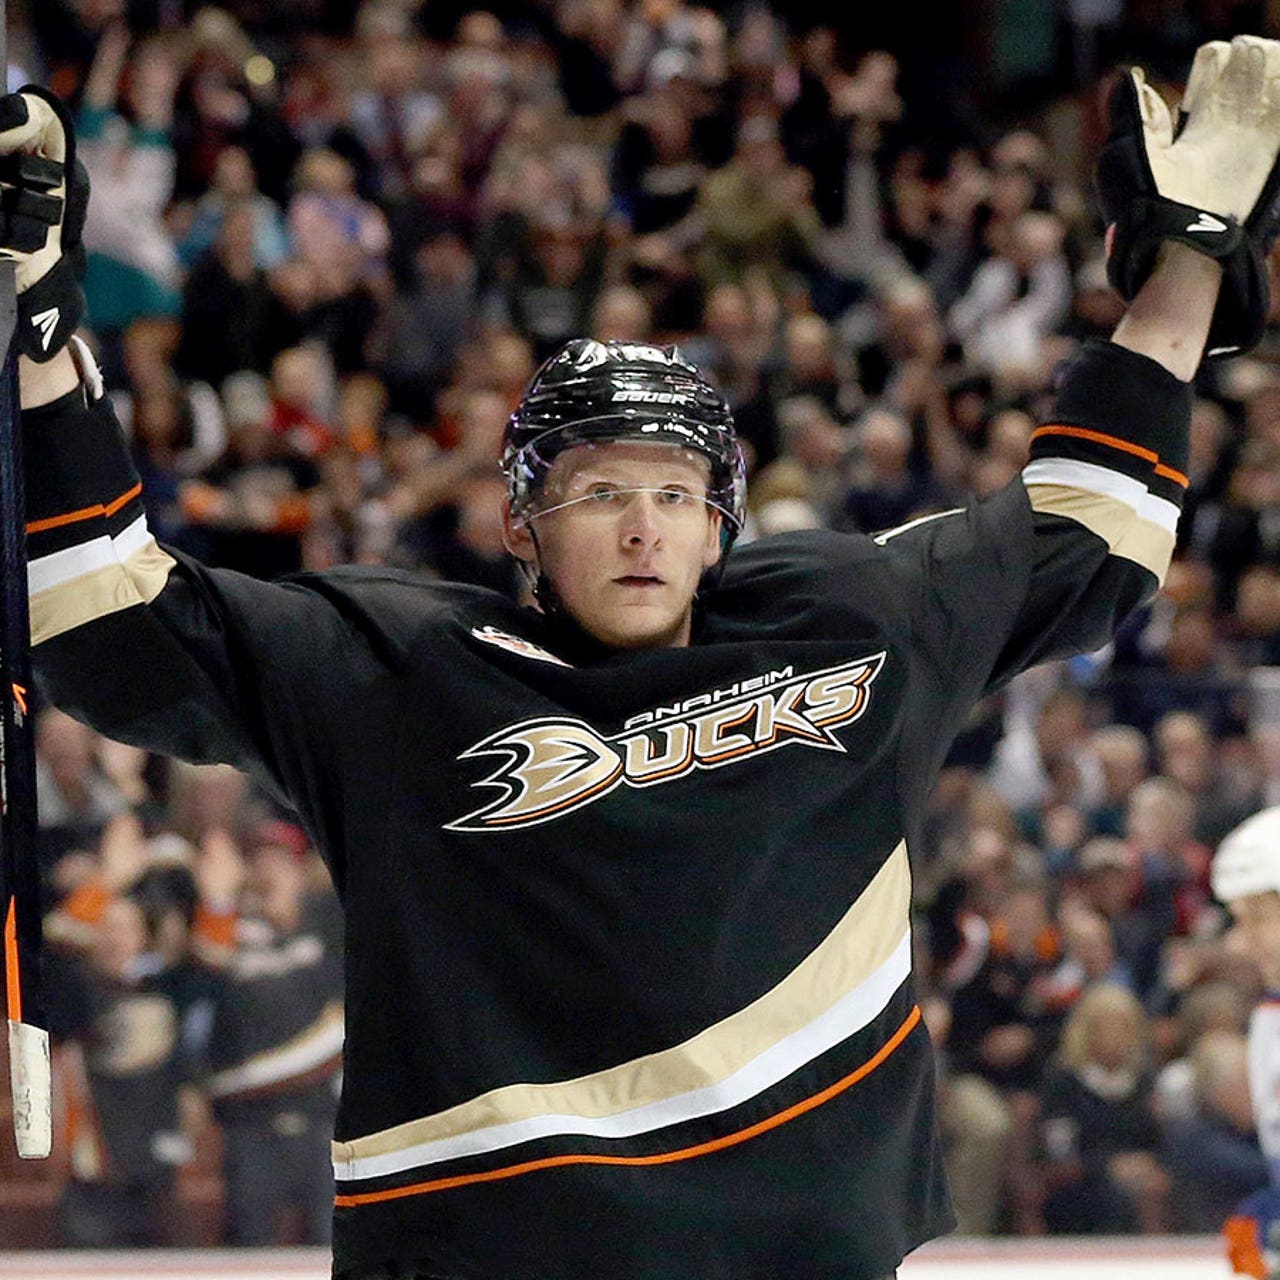 Anaheim Ducks Corey Perry one of NHL's best agitators - Sports